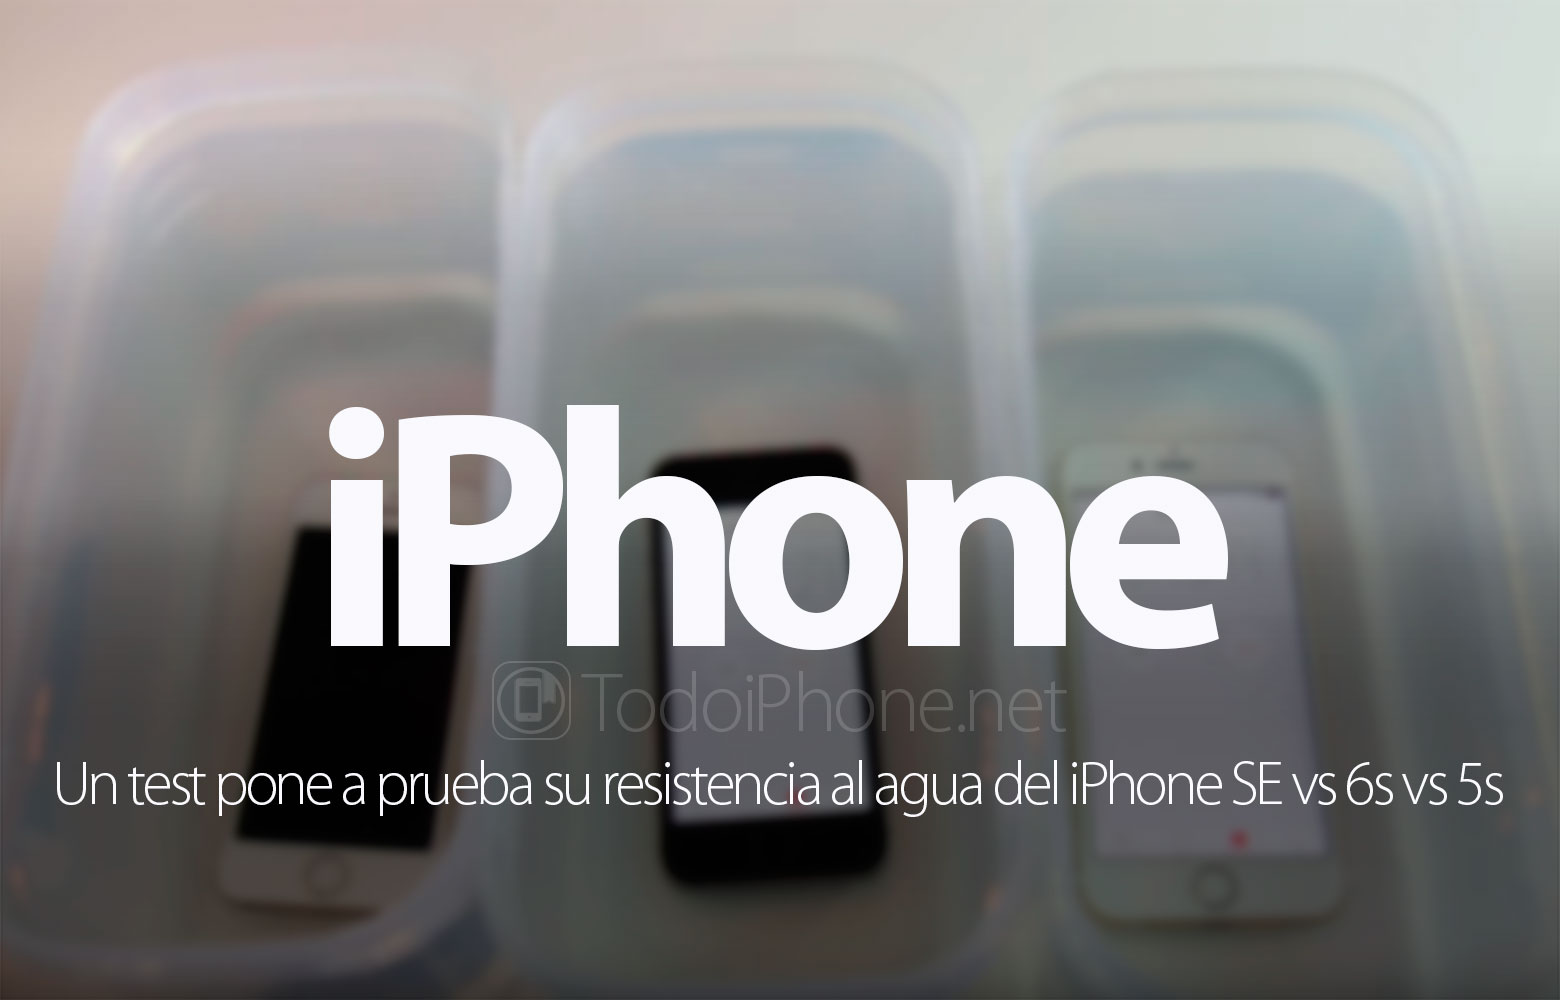 iphone-se-vs-iphone-6s-vs-iphone-5s-prueba-resistencia-agua